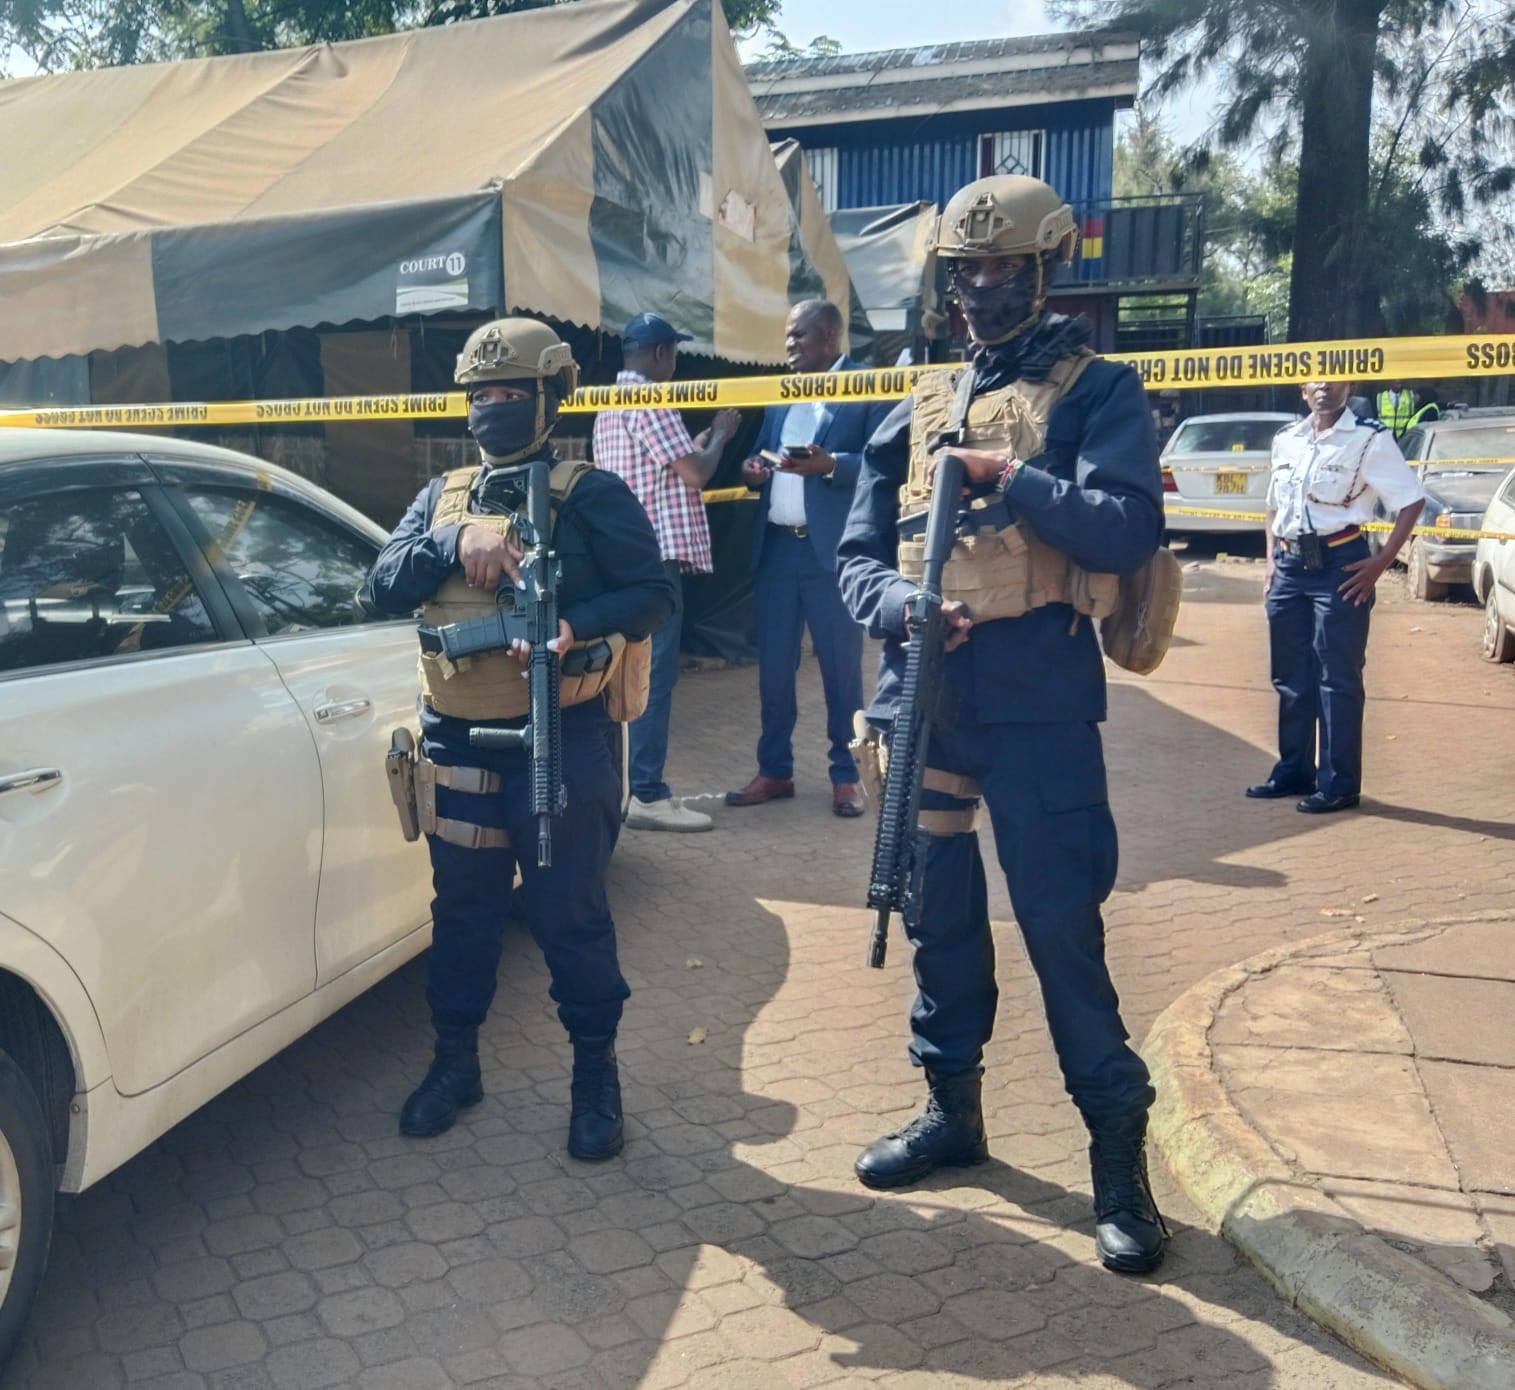 Monica Kivuti shooting: JSC pushes interviews, says court closed until June 24